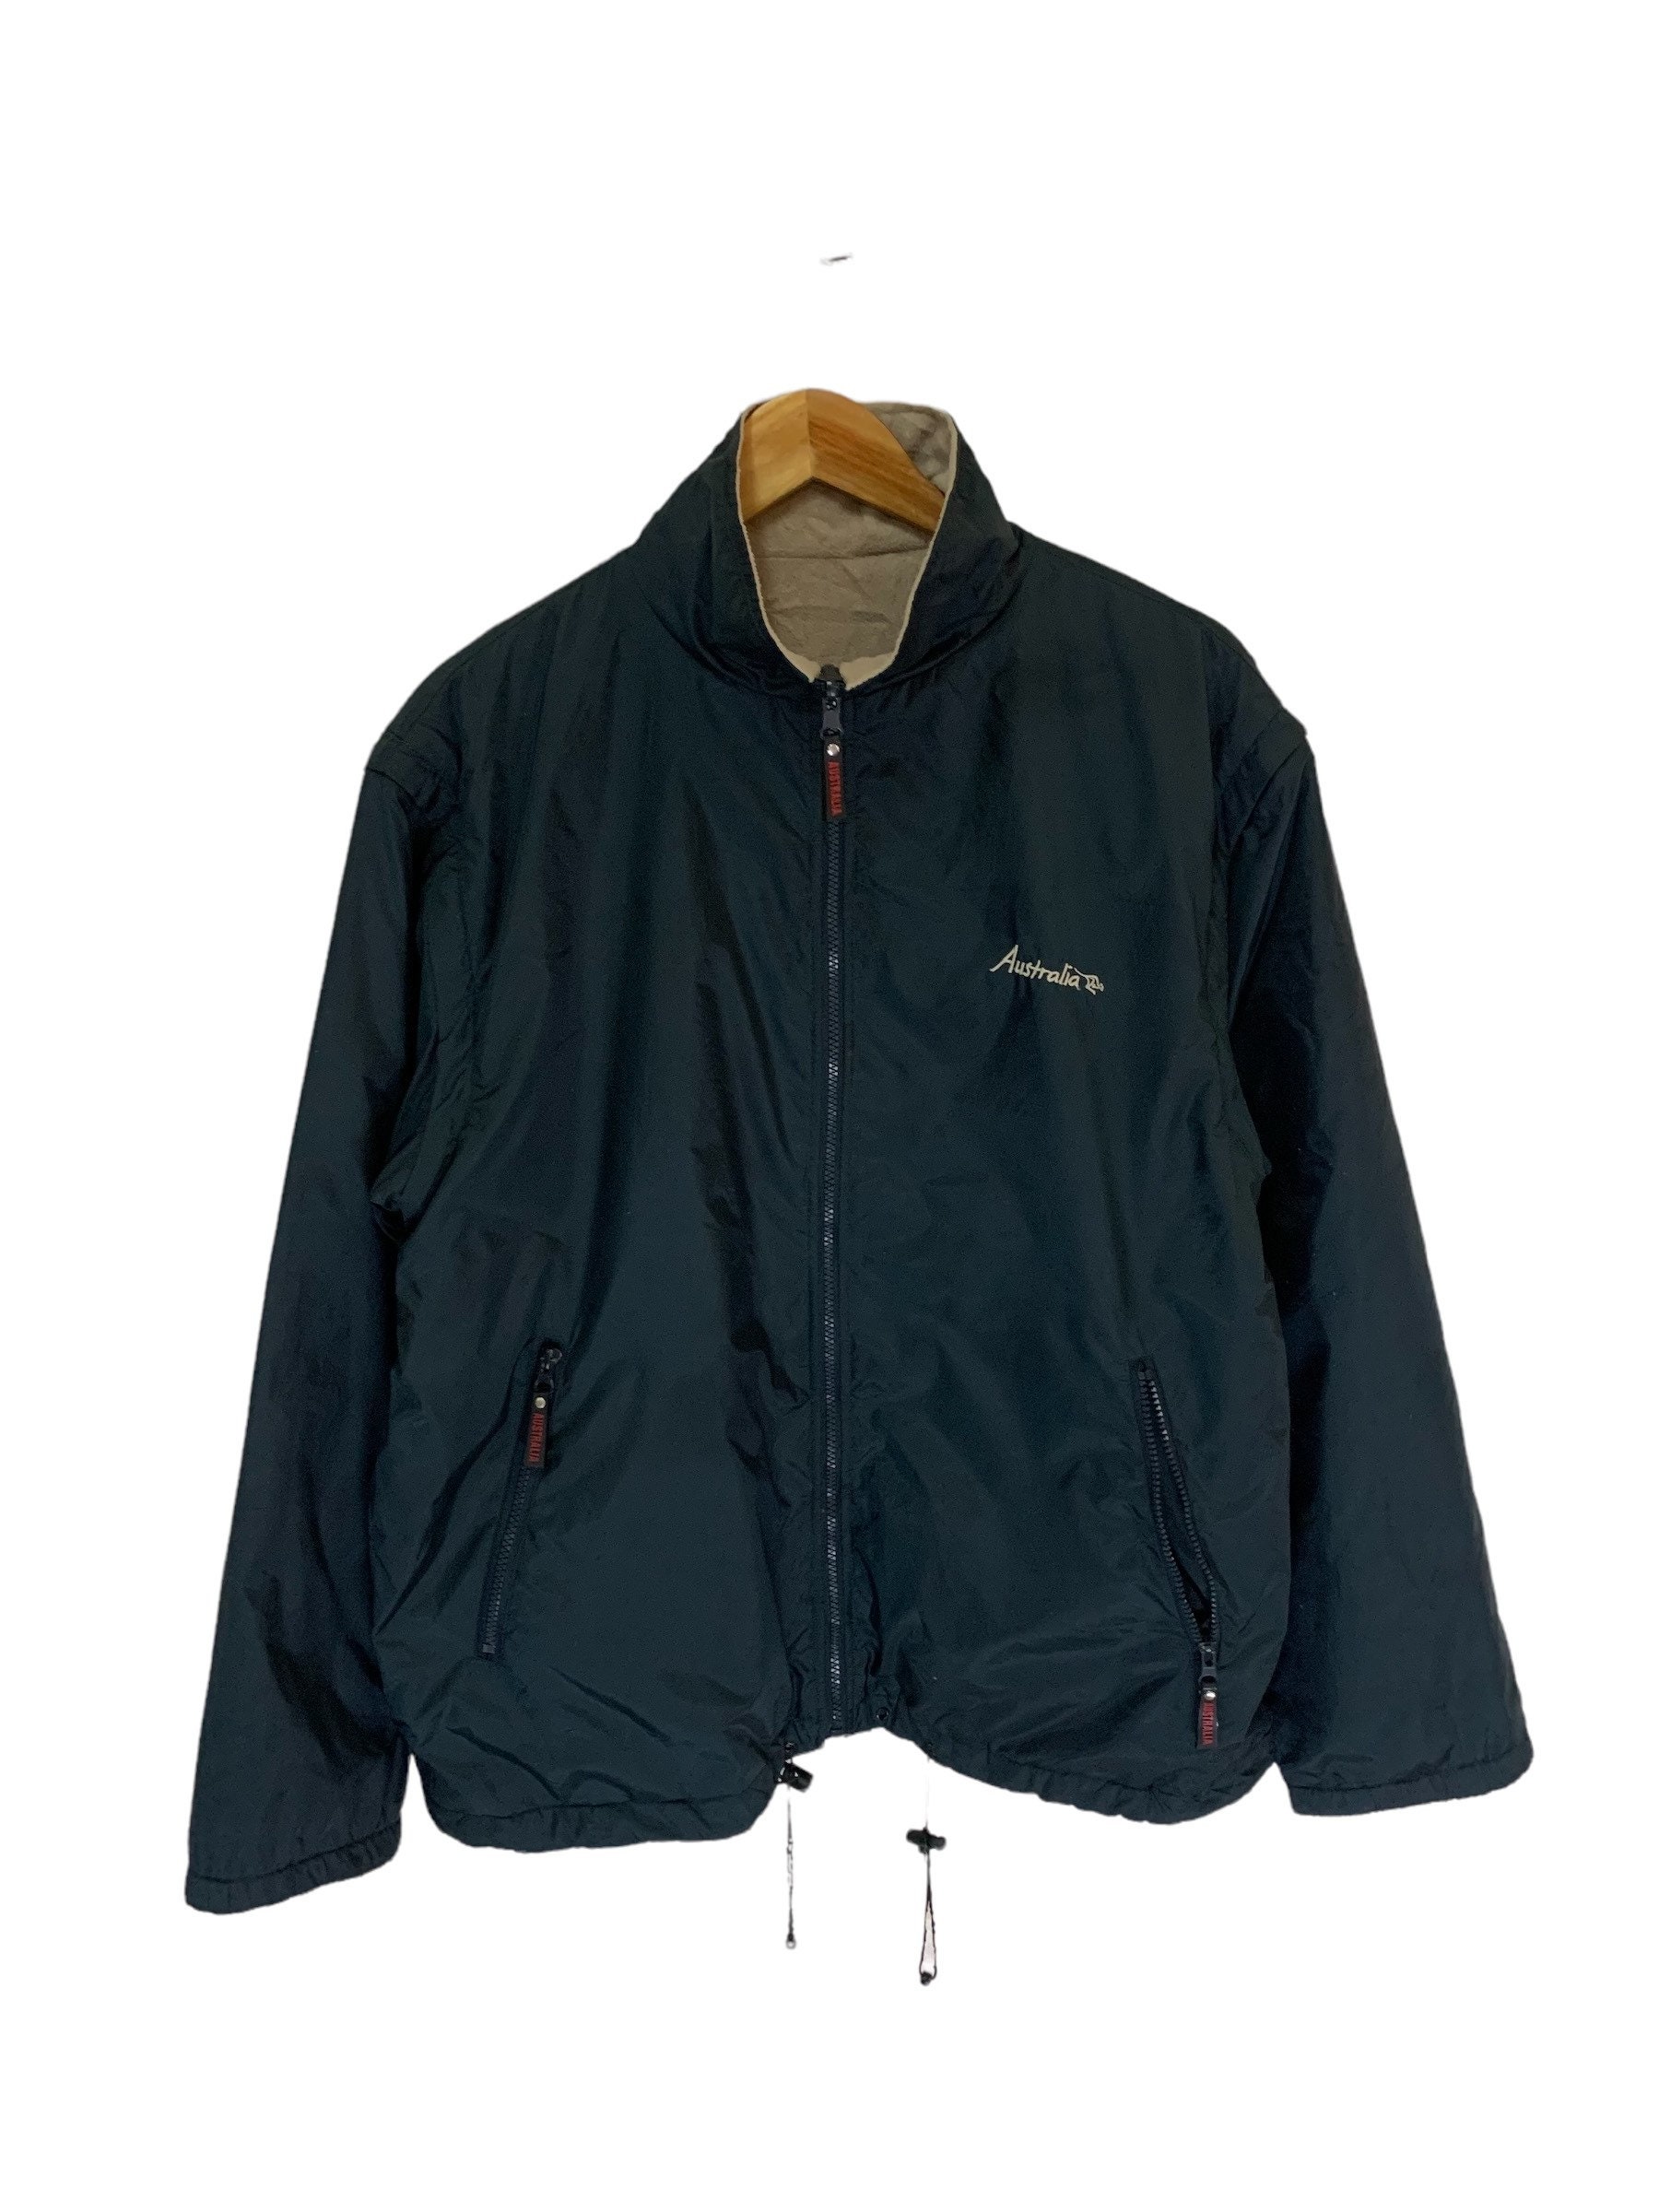 Vintage 90s Australia Riversible Jacket Fleece Polyster Small - Etsy